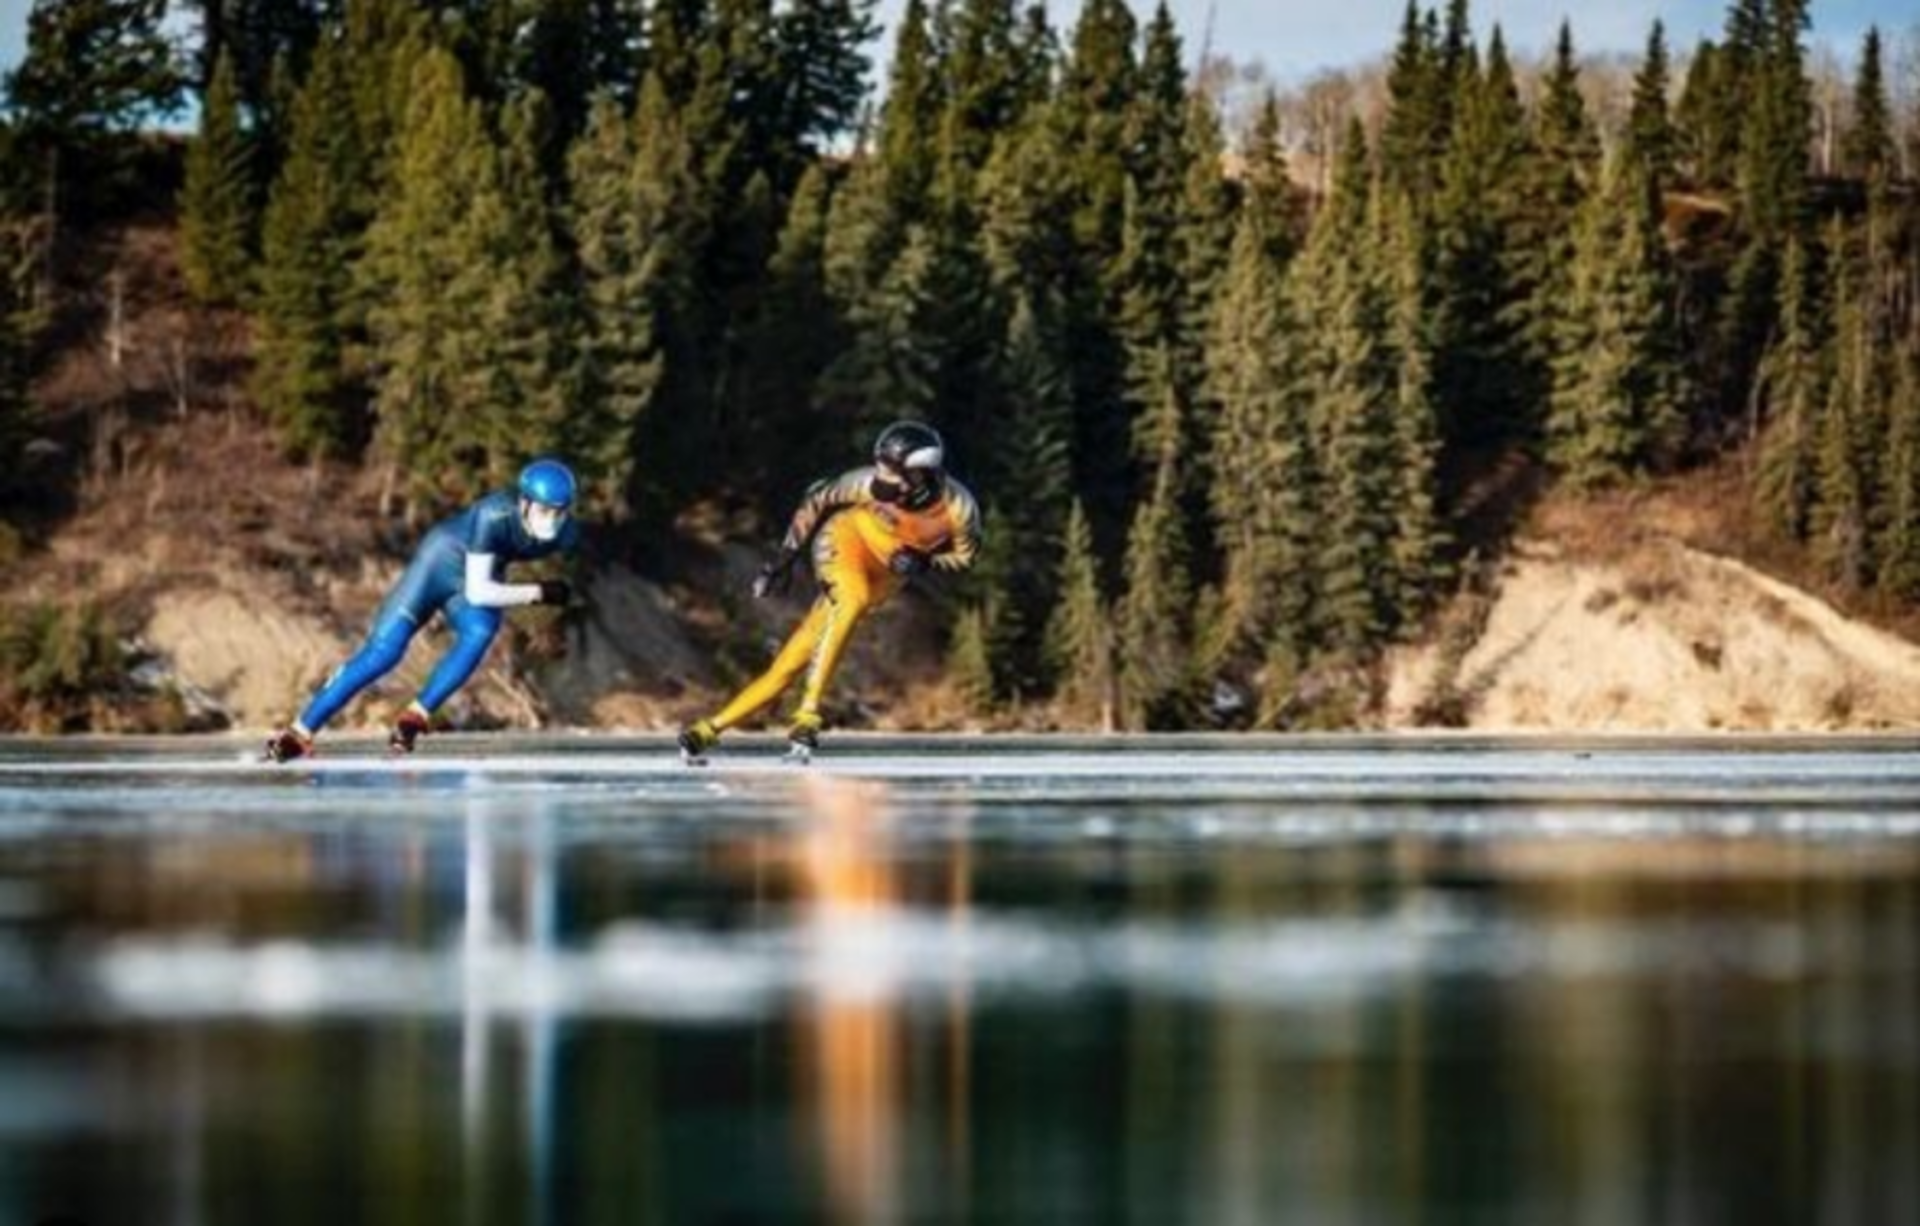 Top outdoor skating destinations in Canada, according to Team Canada